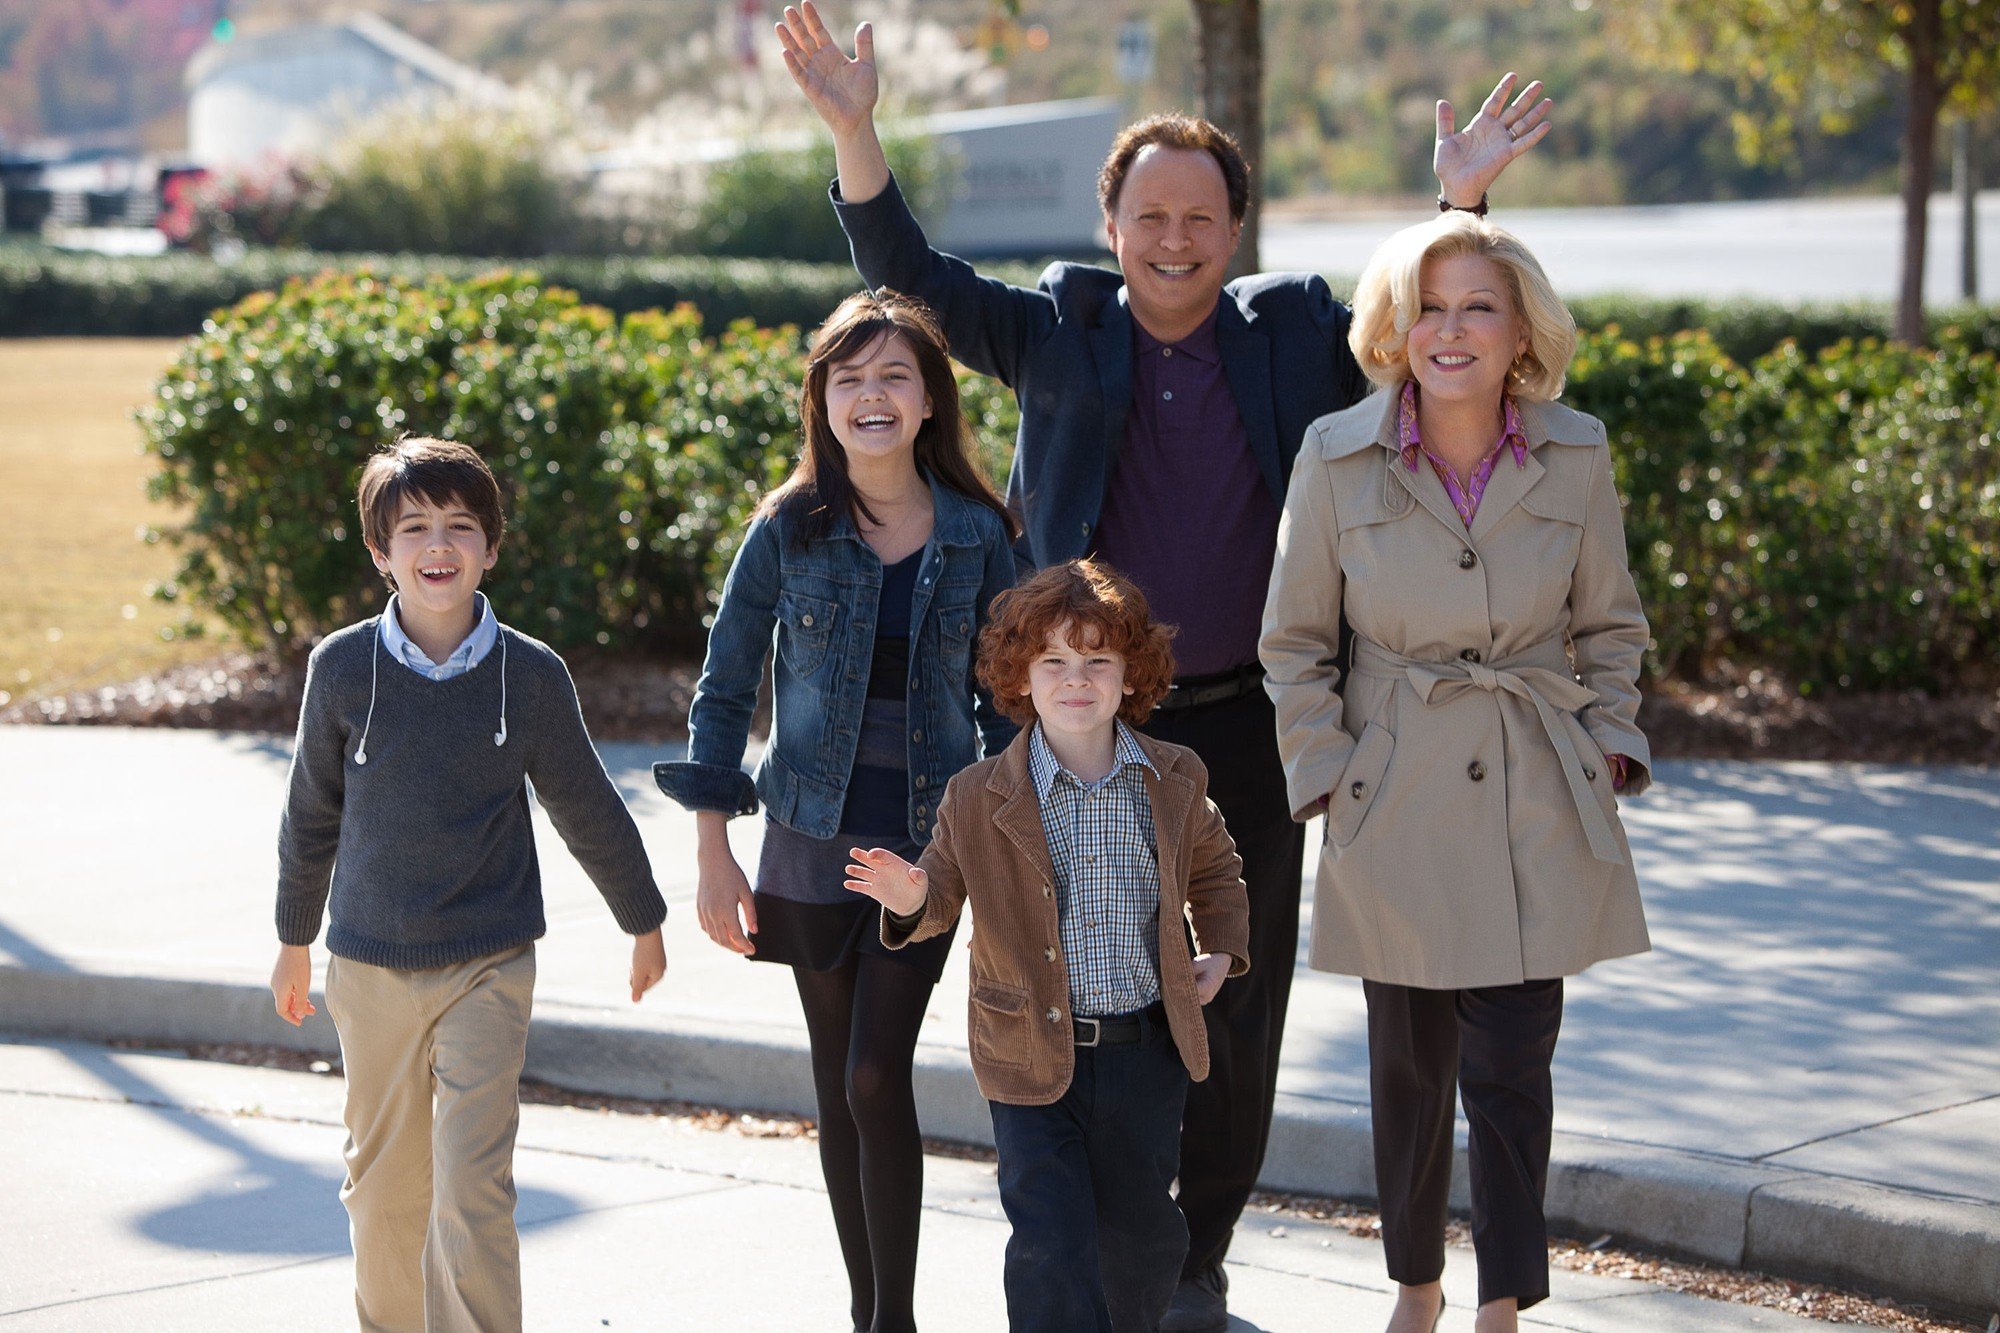 Joshua Rush, Bailee Madison, Kyle Harrison Breitkopf, Billy Crystal and Bette Midler in 20th Century Fox's Parental Guidance (2012)